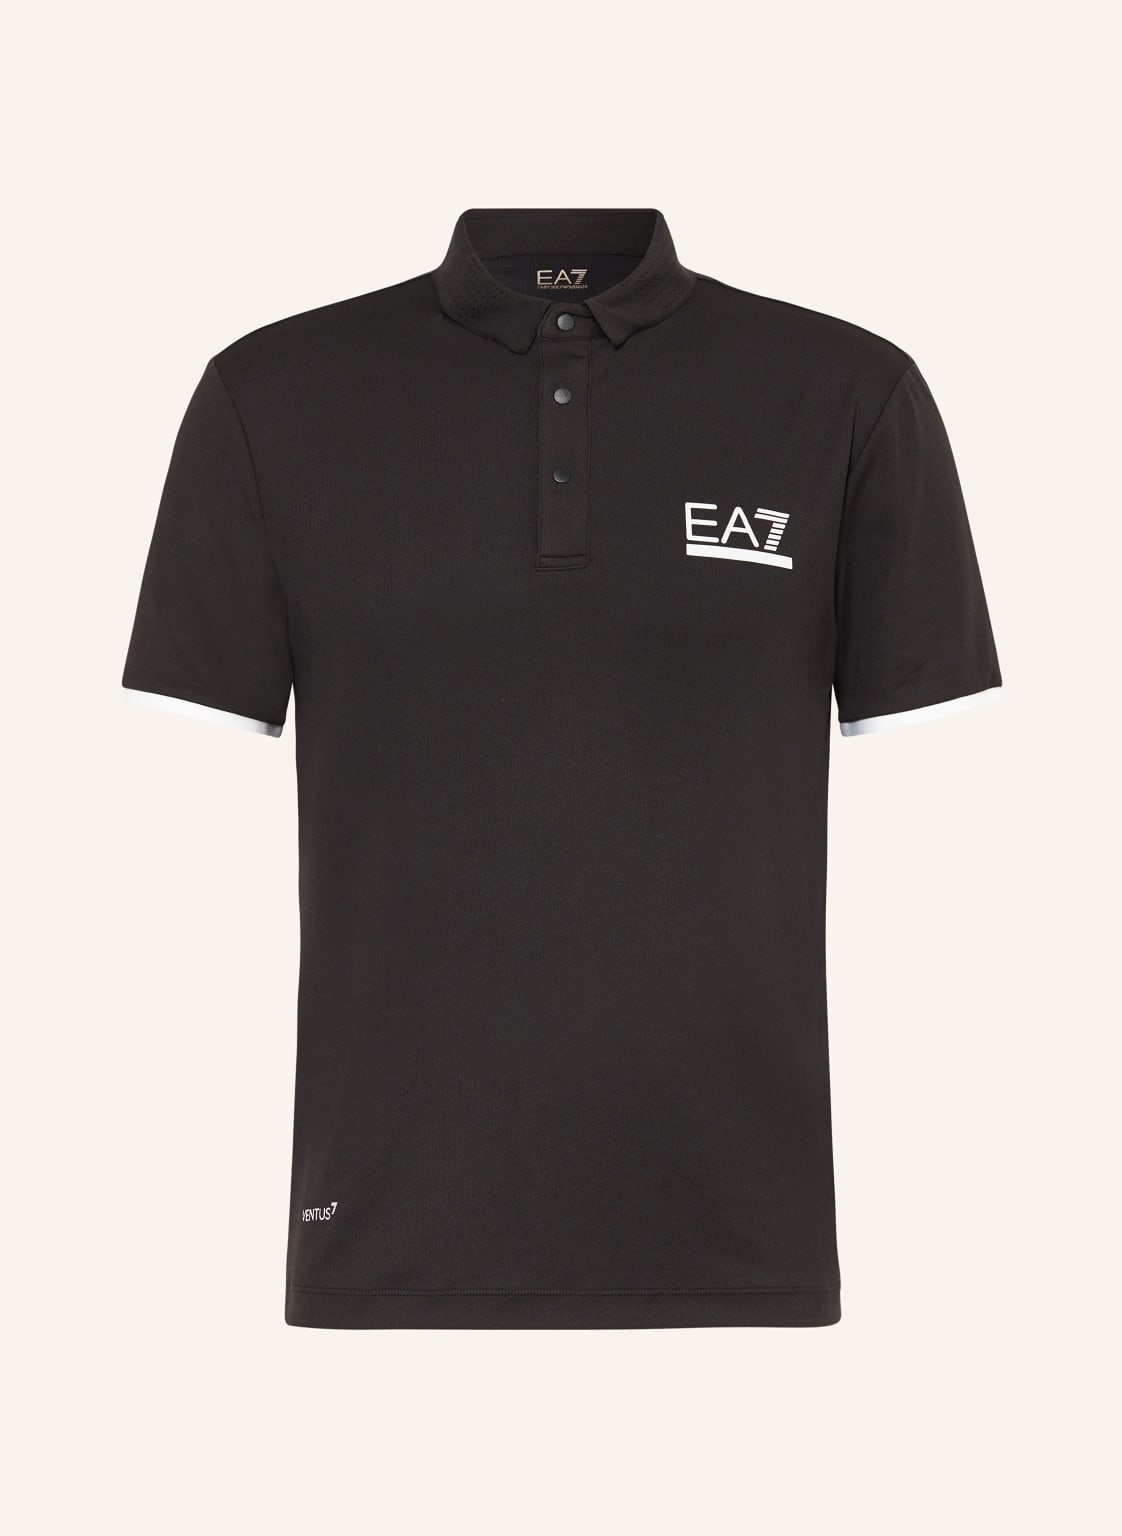 ea7 Emporio Armani Funktions-Poloshirt Pro weiss von EA7 EMPORIO ARMANI